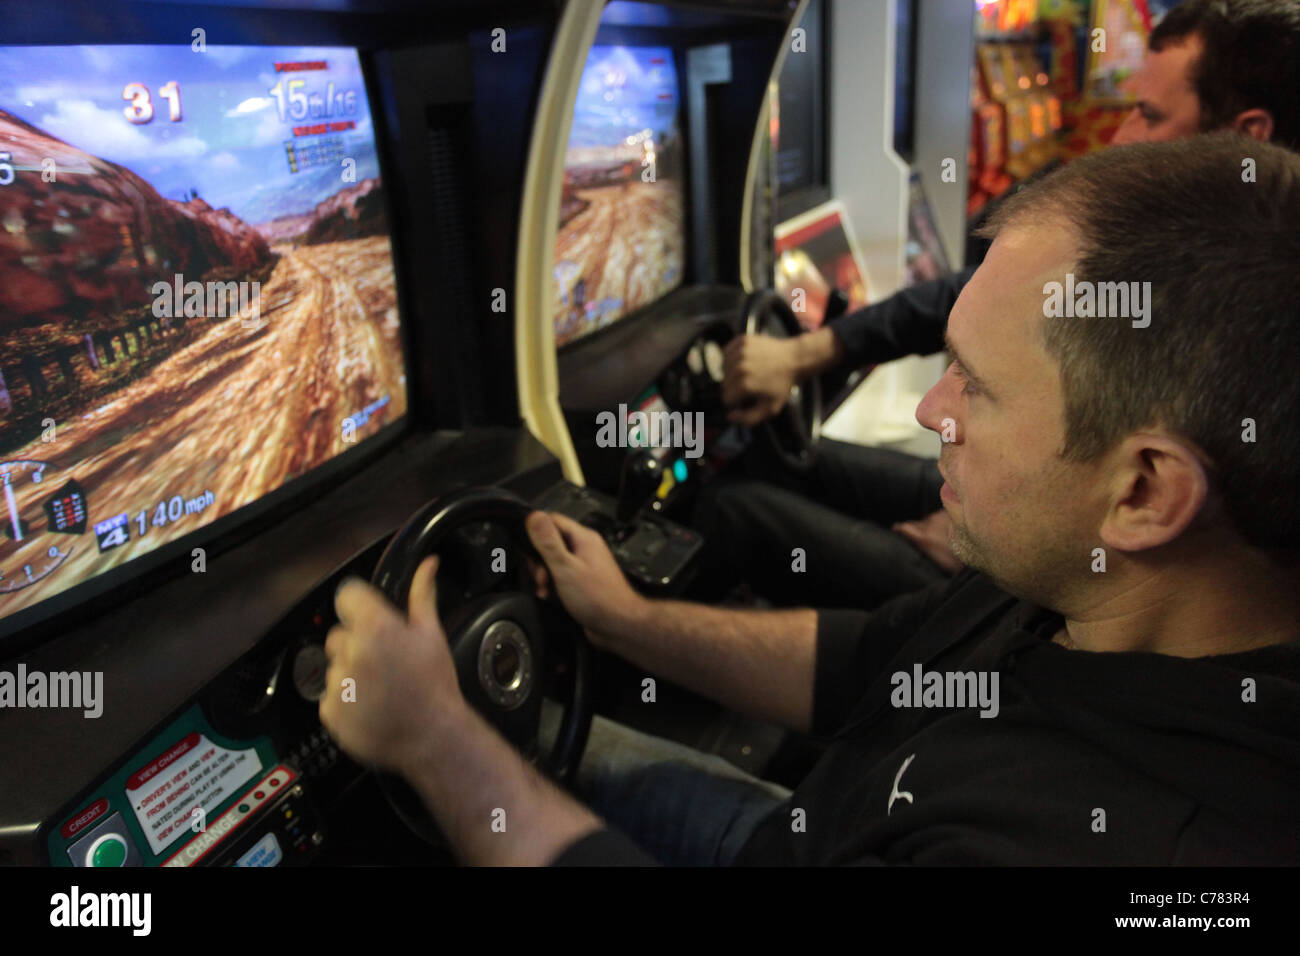 man playing on arcade machine, Stock Photo